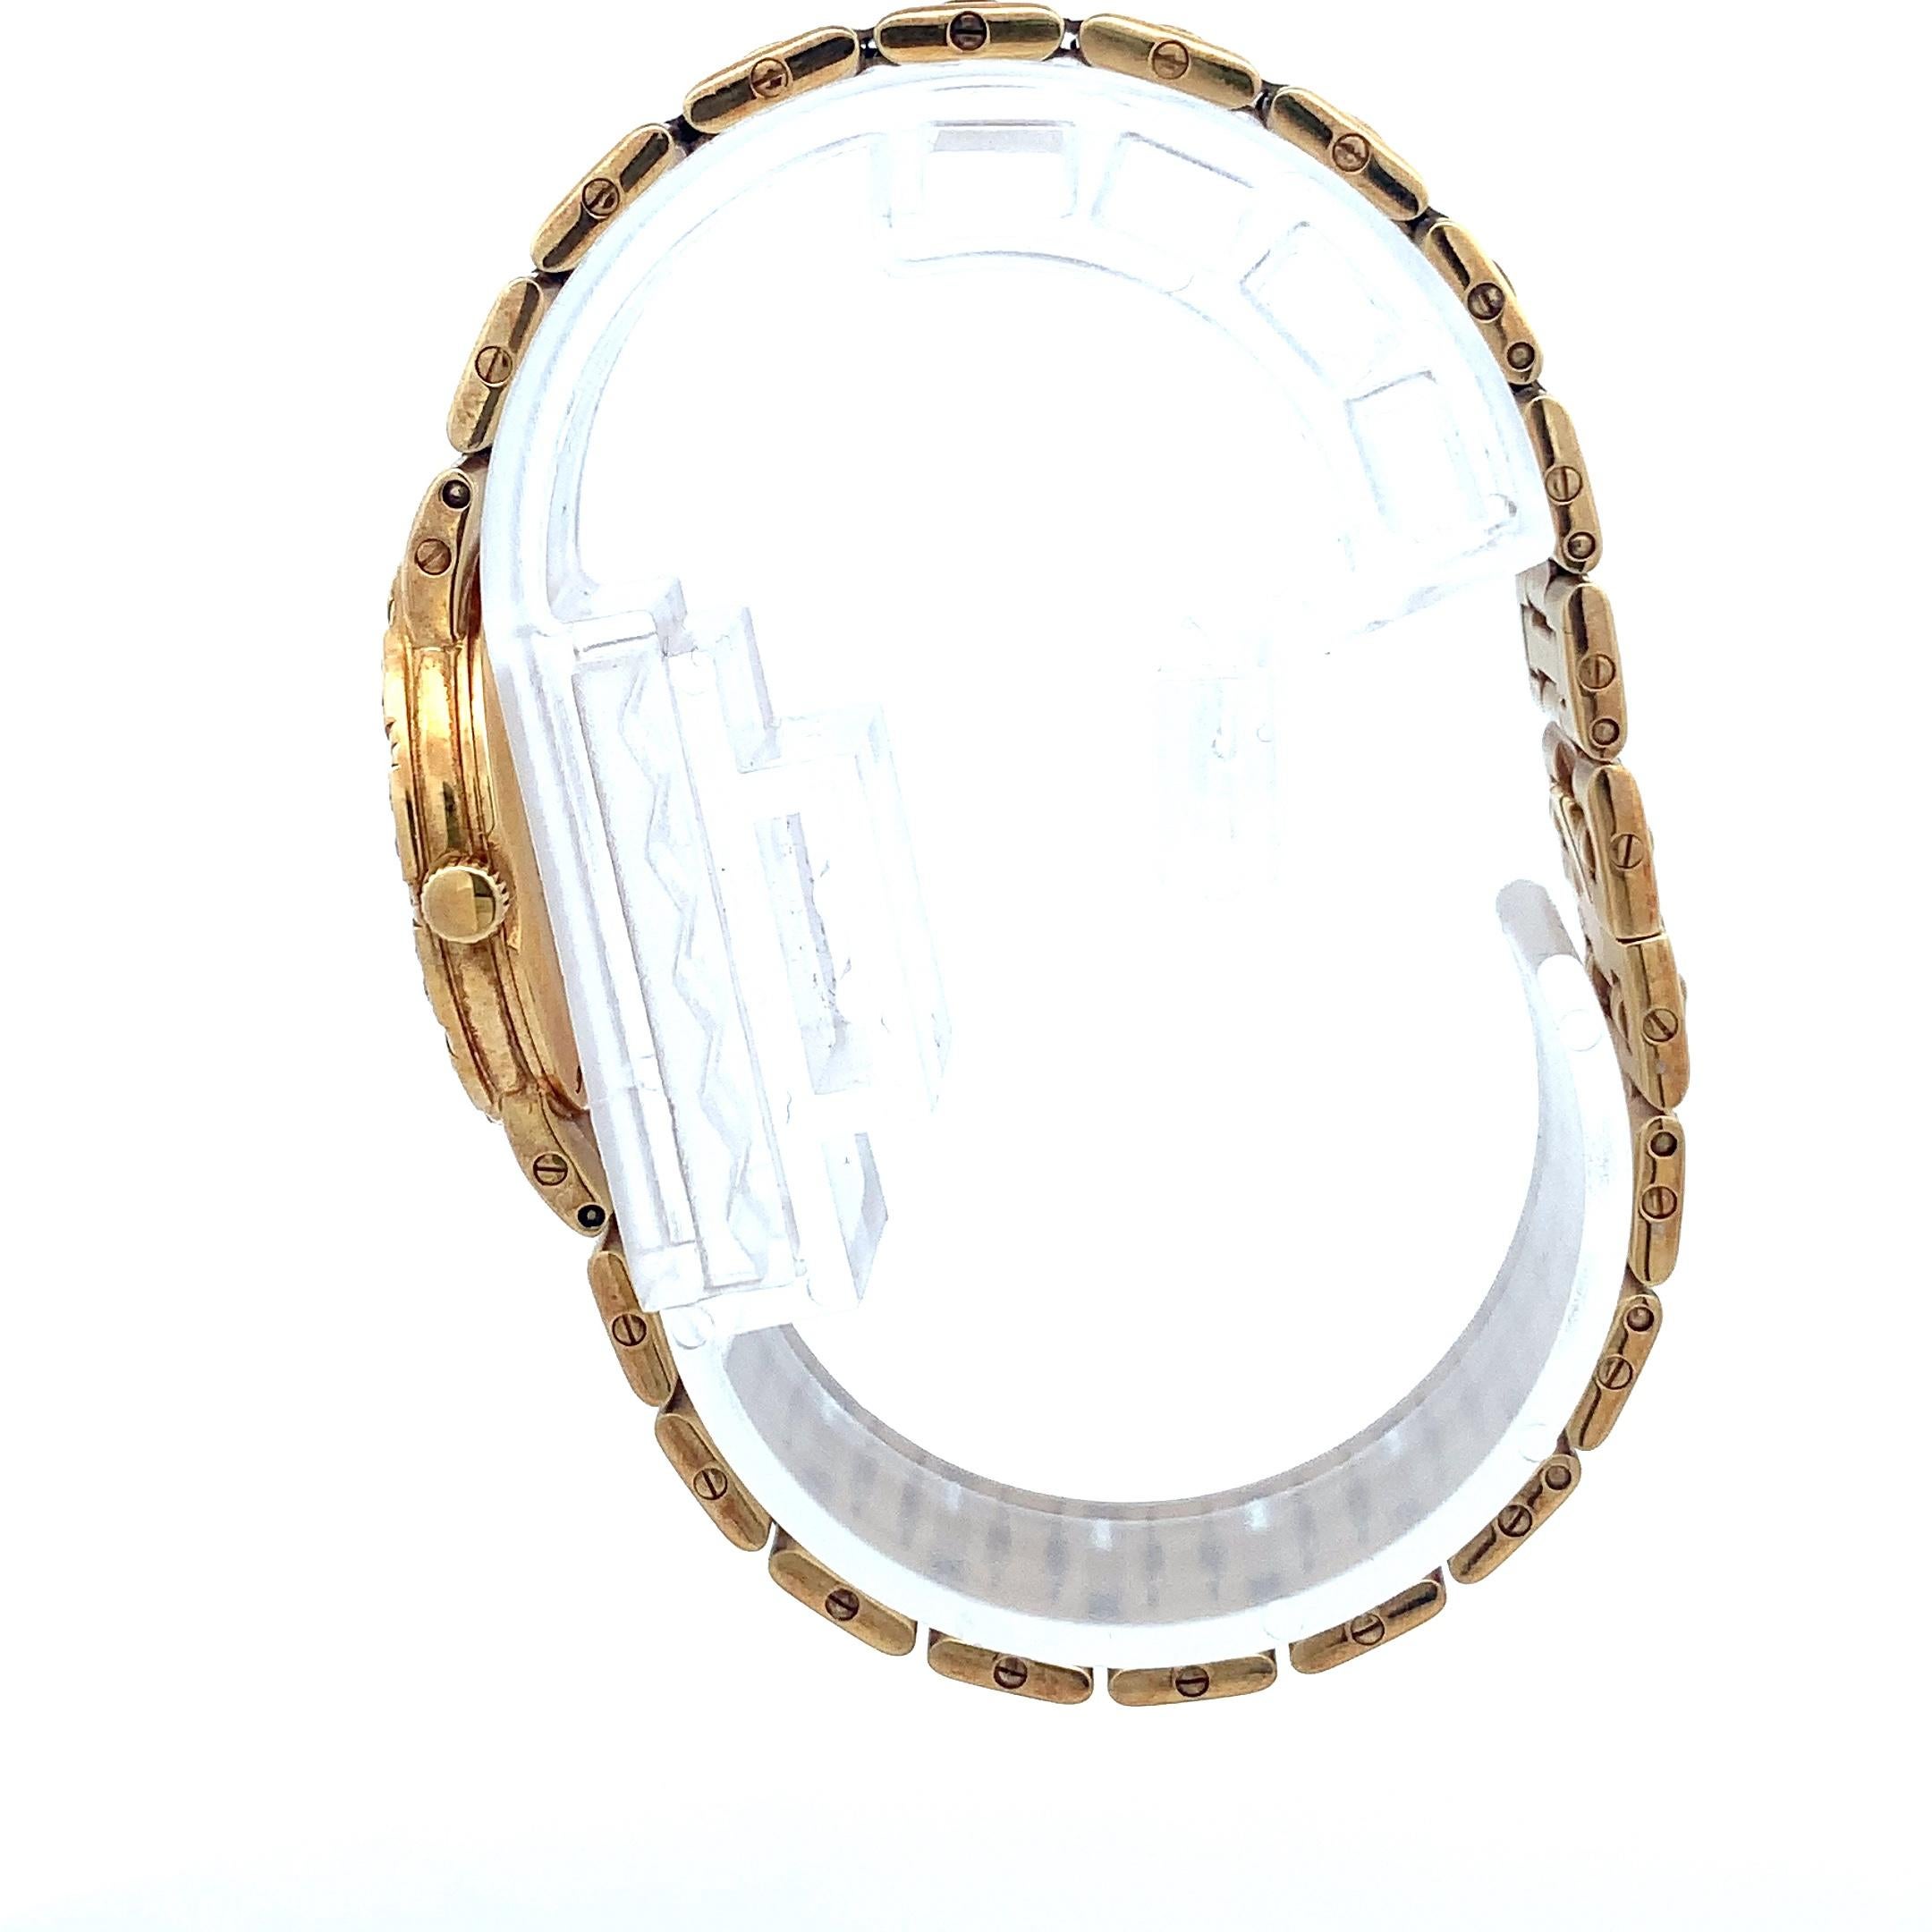 Brilliant Cut Piaget Diamond Gold Lady's Watch - Model 84024K817 For Sale